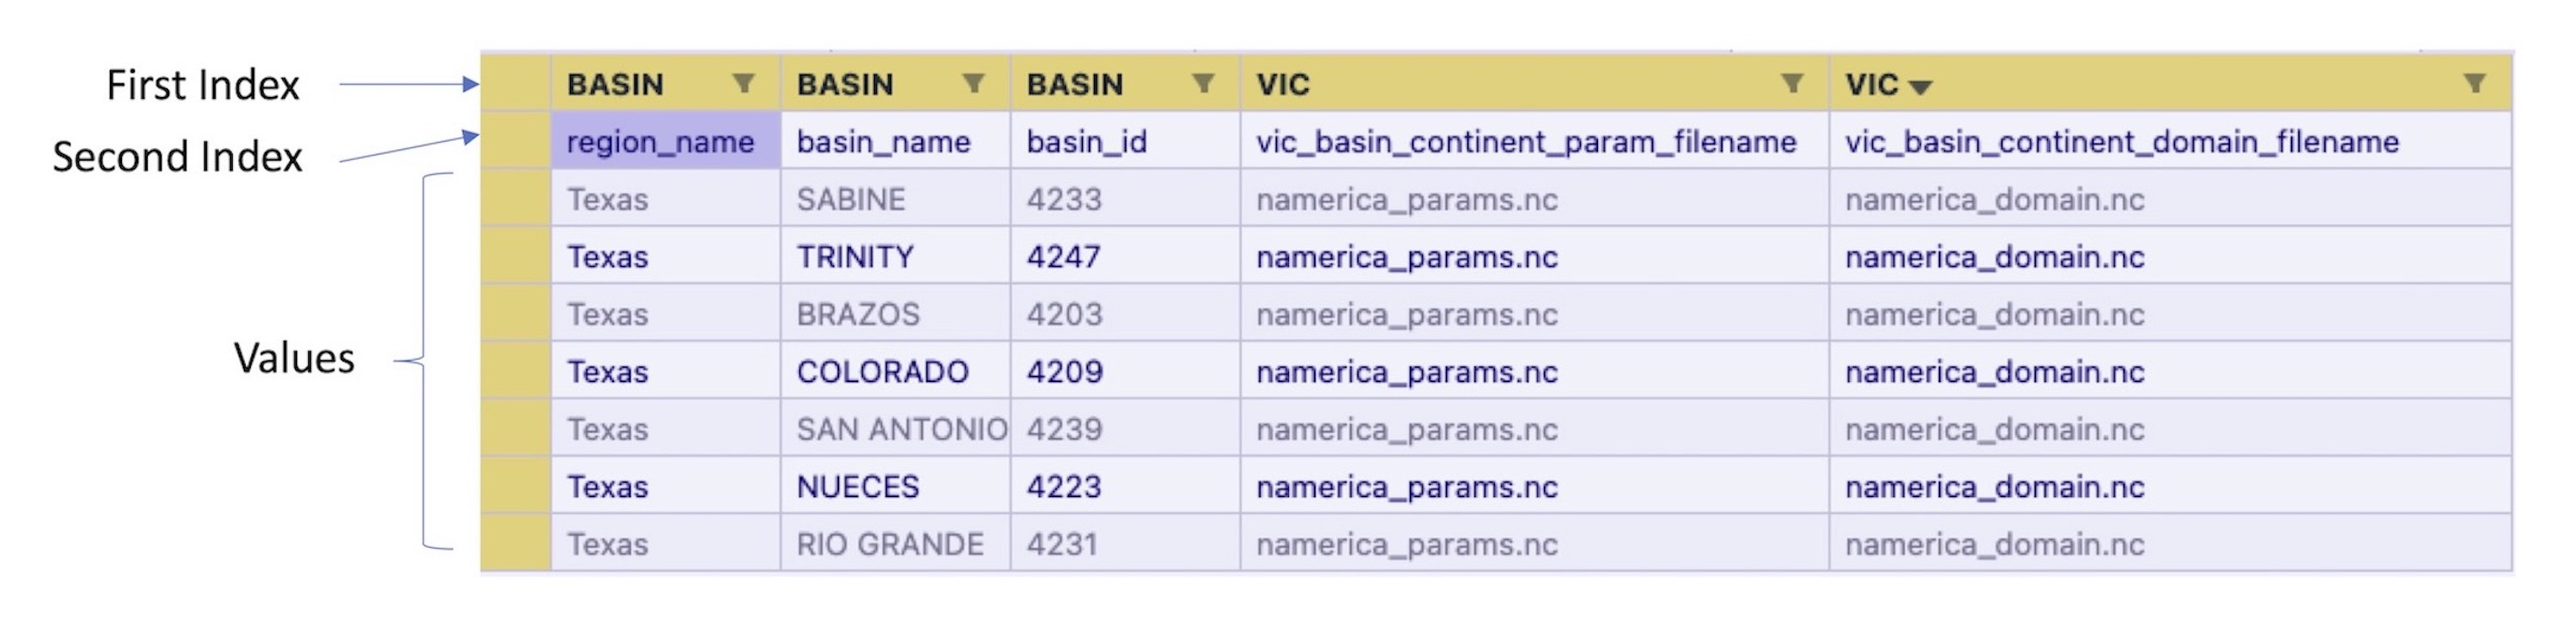 Screenshot of Basins_Metadata.csv